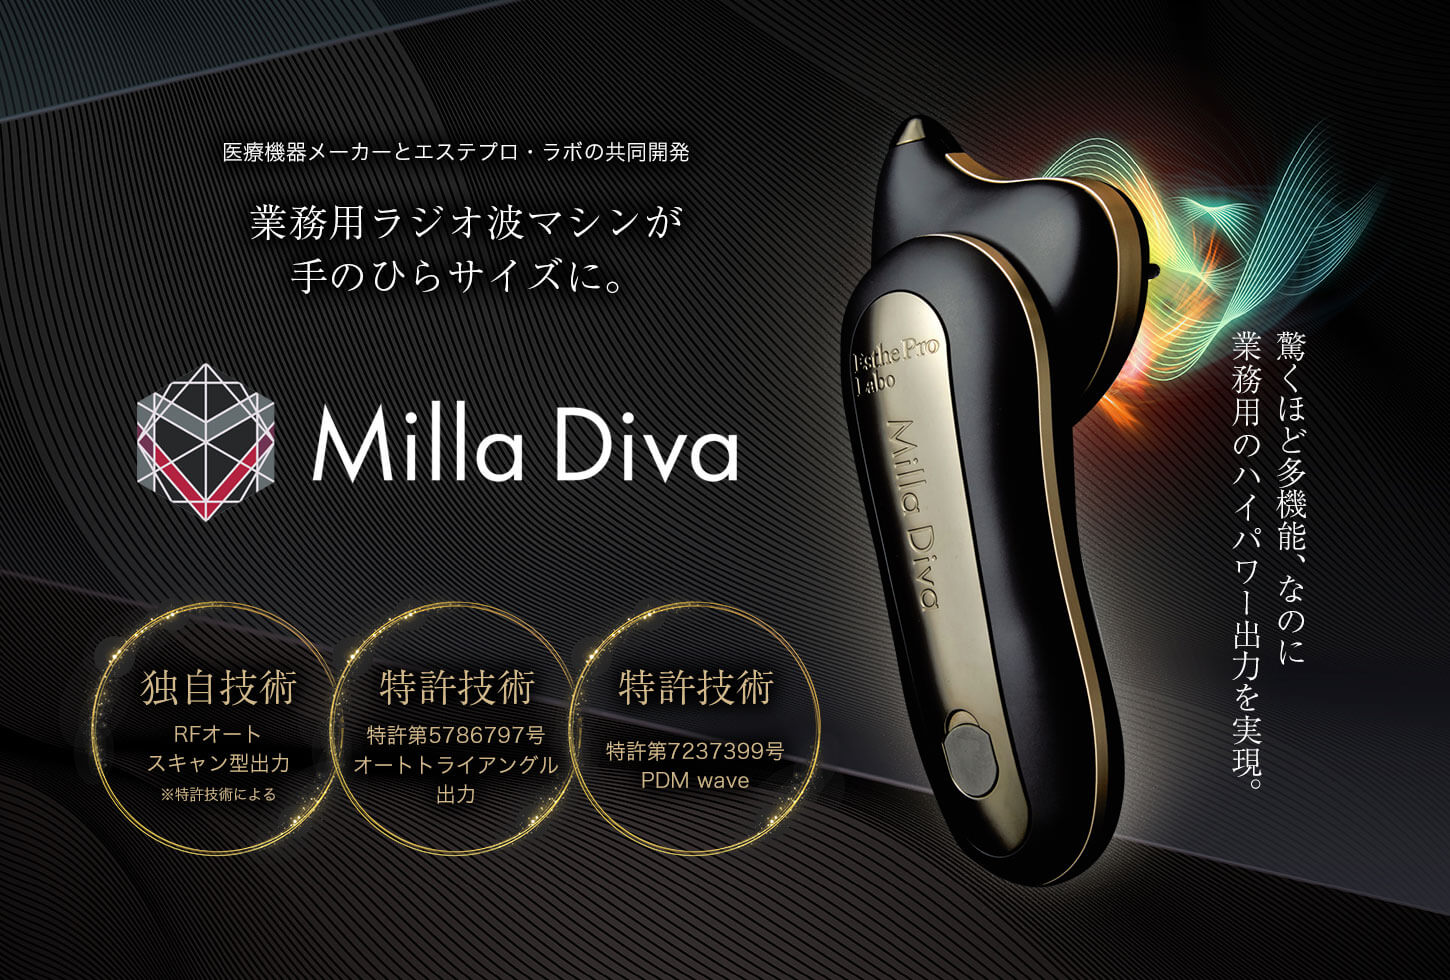 Milla Diva Esthe Pro Lab 日本製造